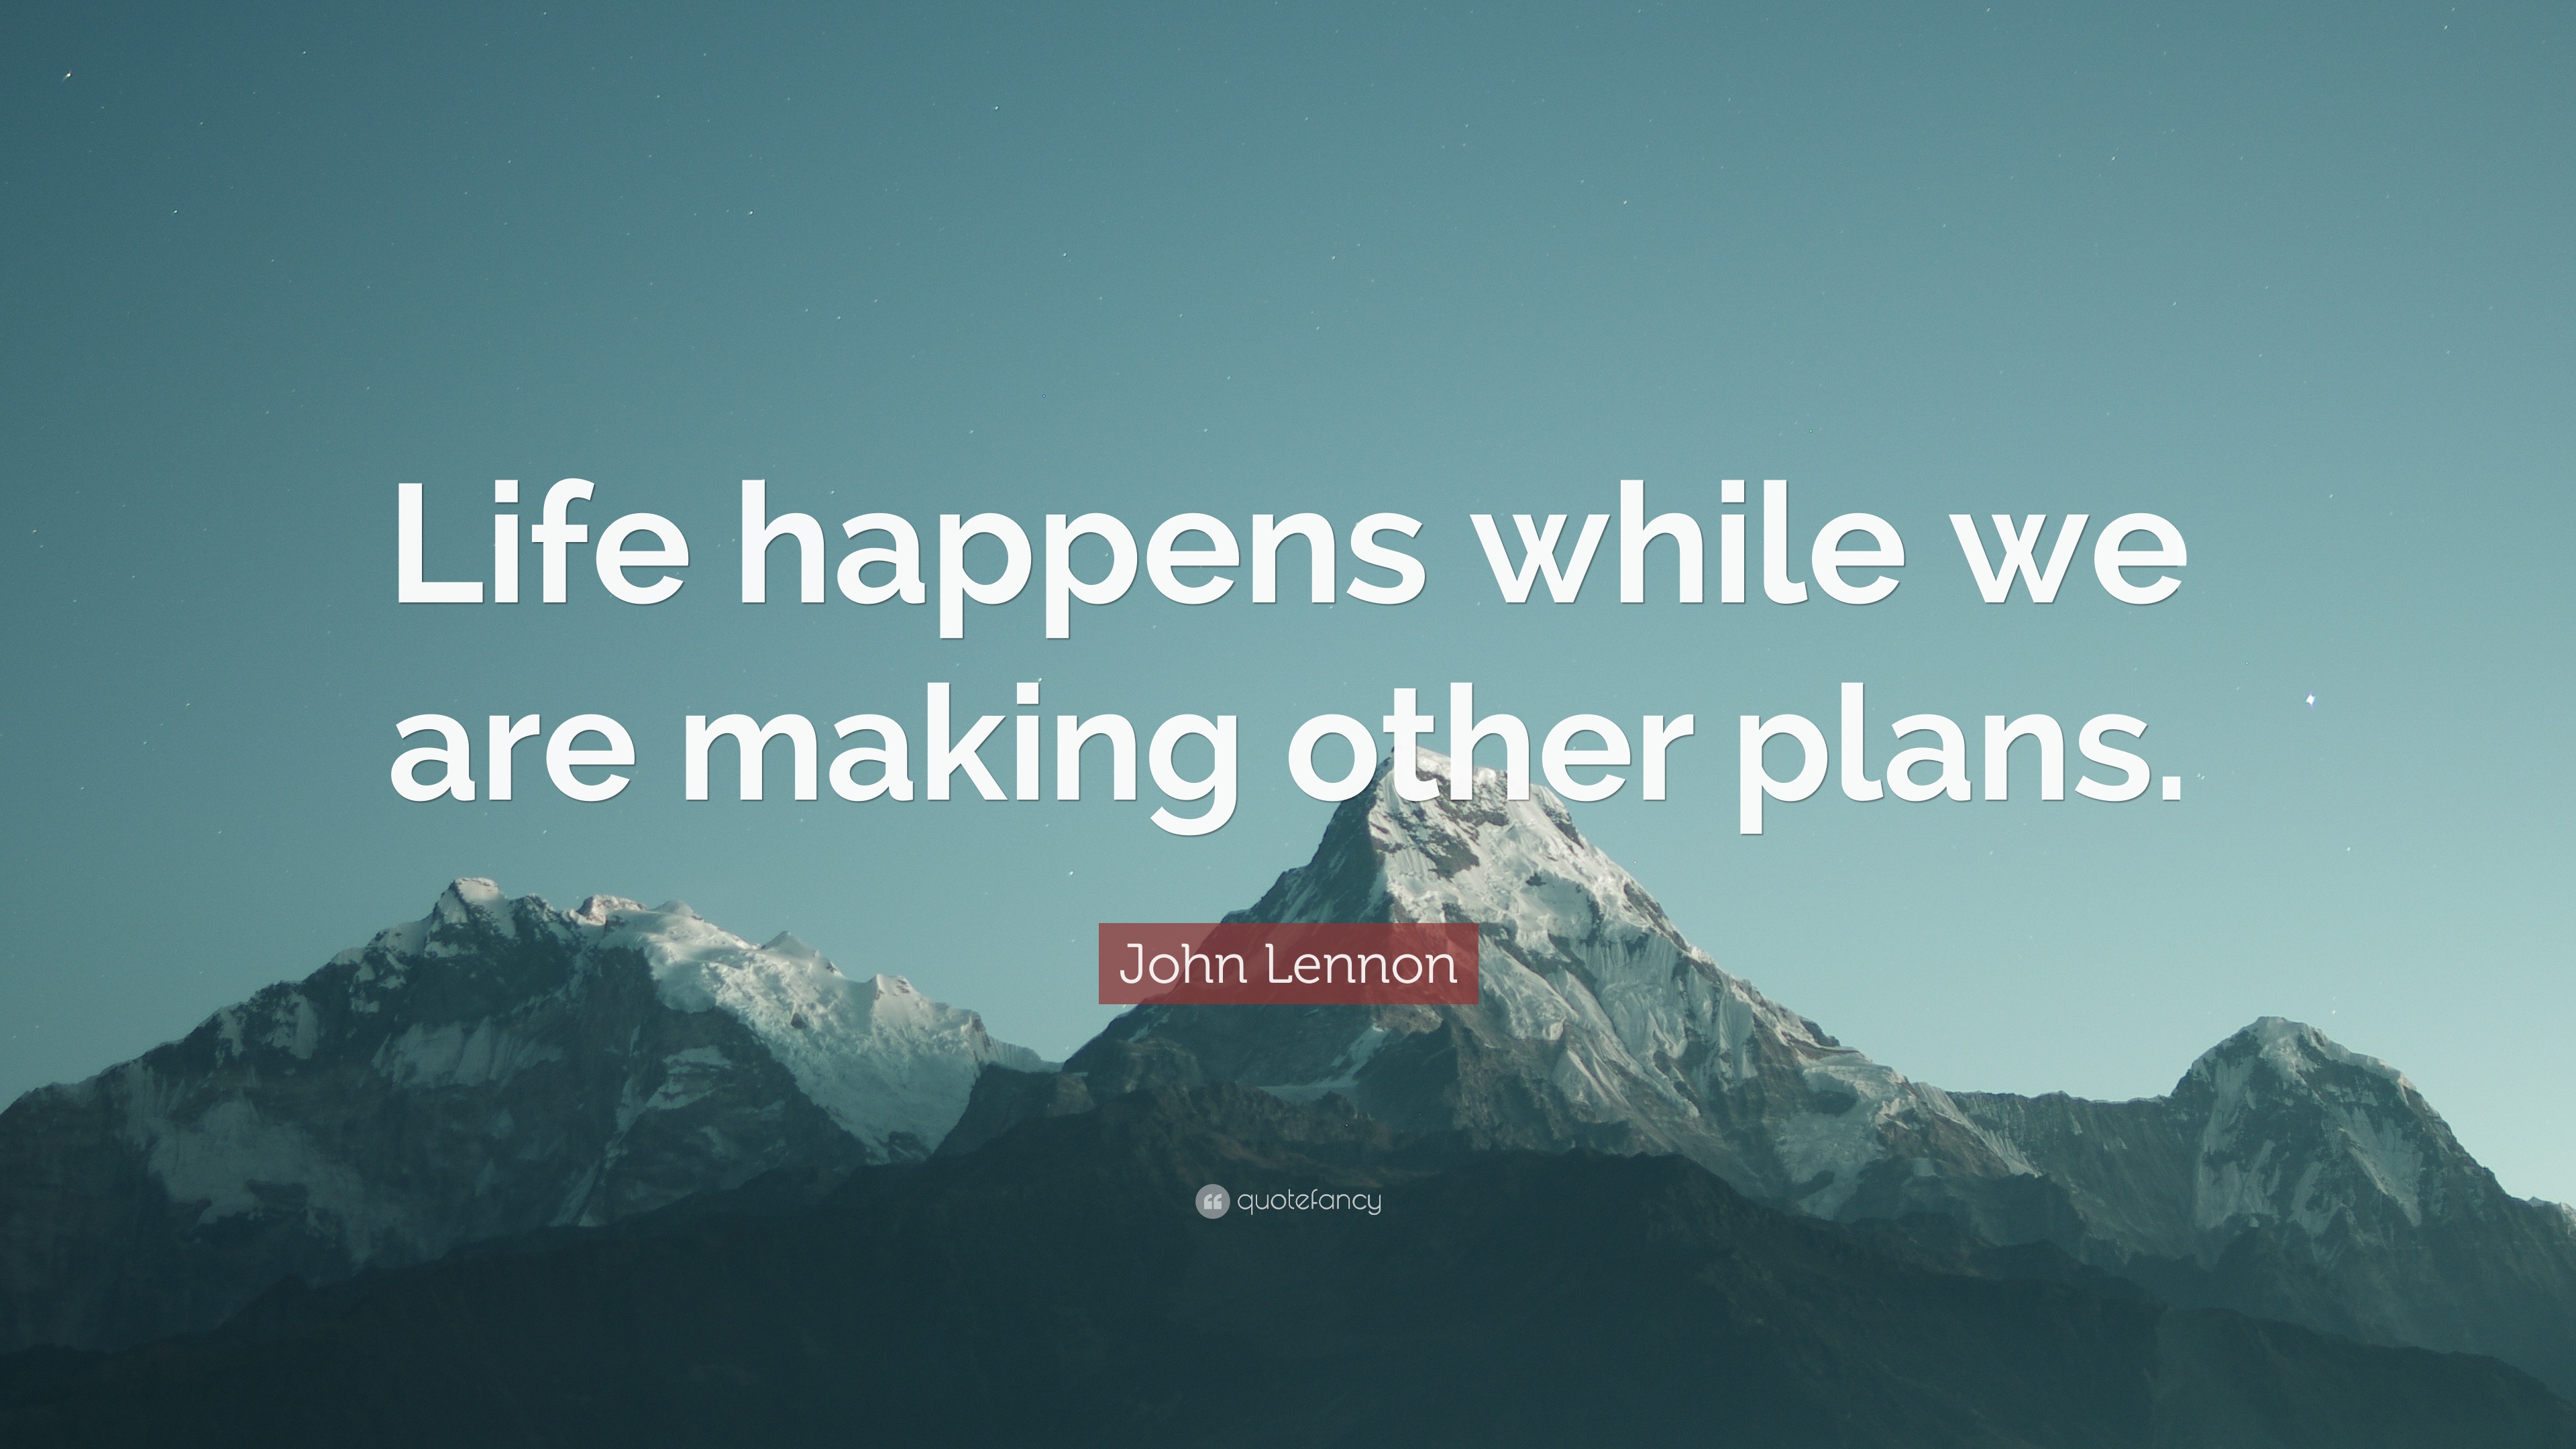 life is what happens john lennon quote